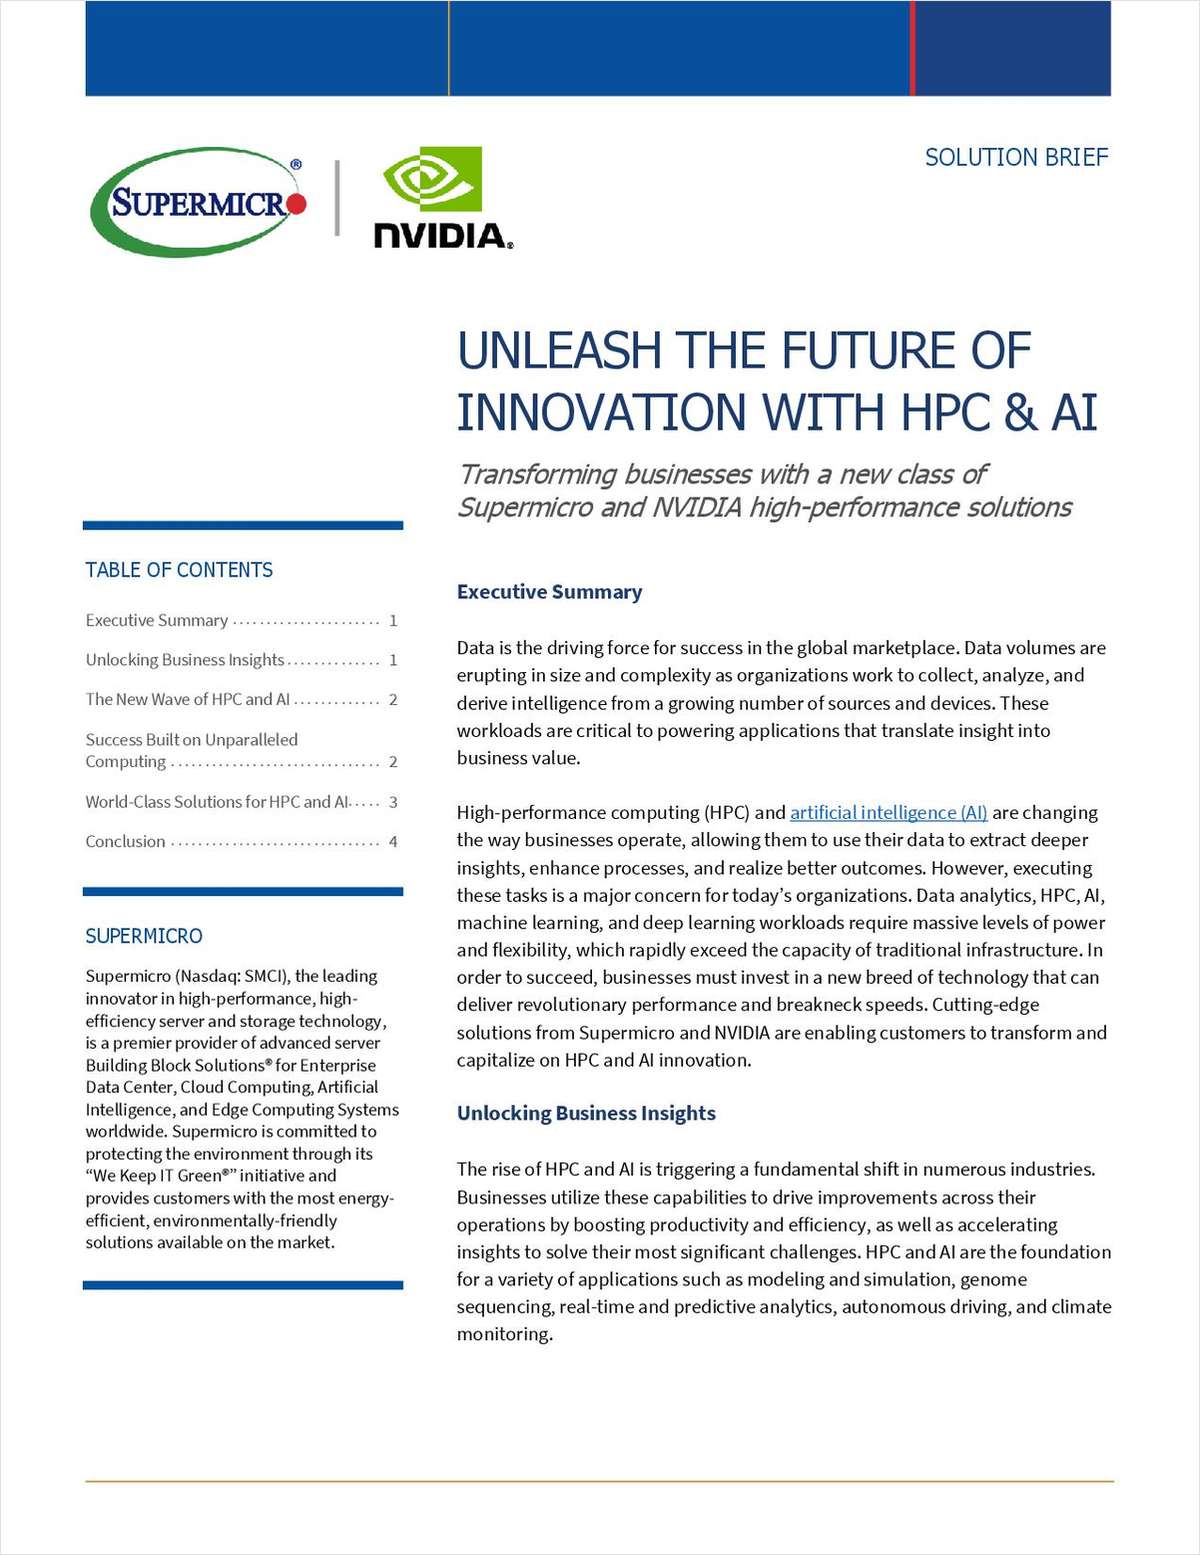 Unleash the Future of Innovation with HPC & AI